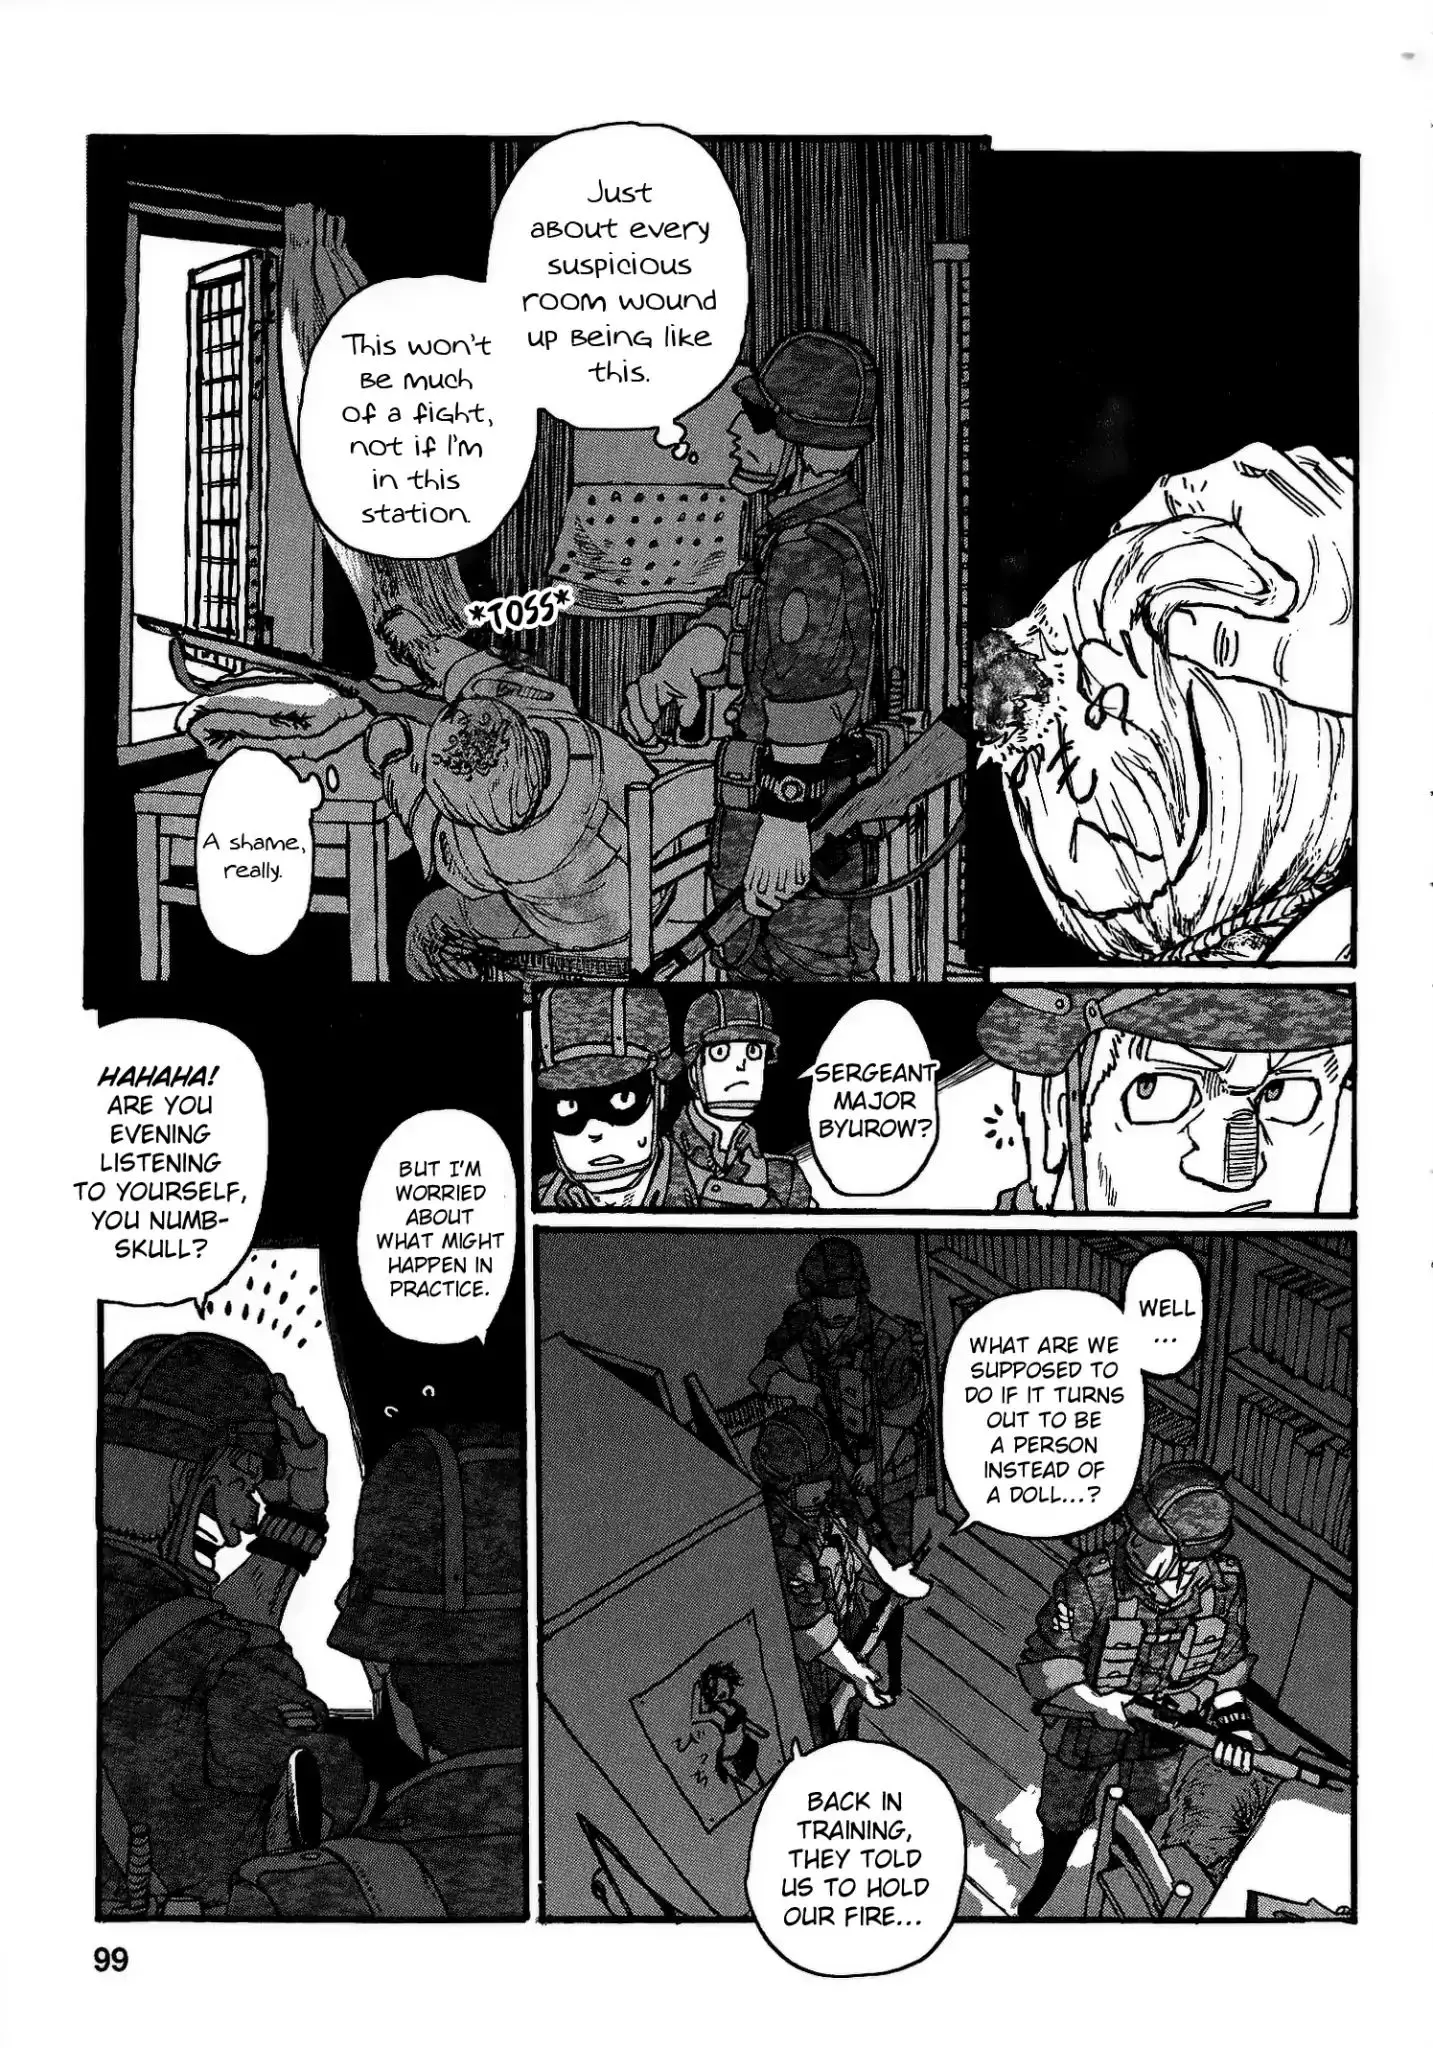 Groundless - Sekigan No Sogekihei - 20 page 45-4b2f1a2c